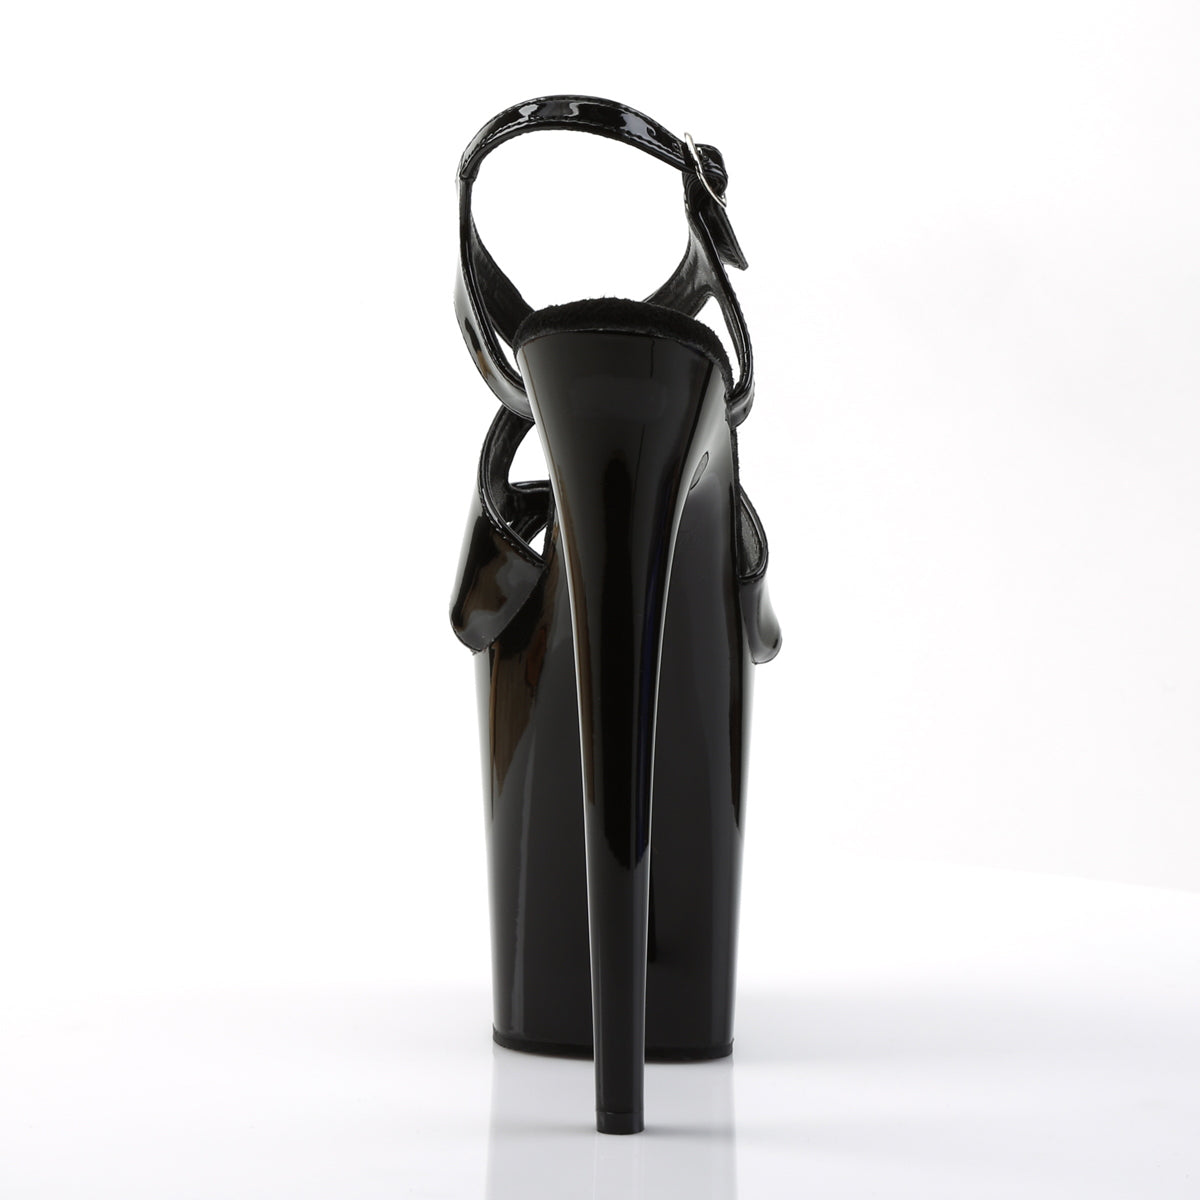 FLAMINGO-831 8 Inch Heel Black Patent Pole Dancing Platforms-Pleaser- Sexy Shoes Fetish Footwear